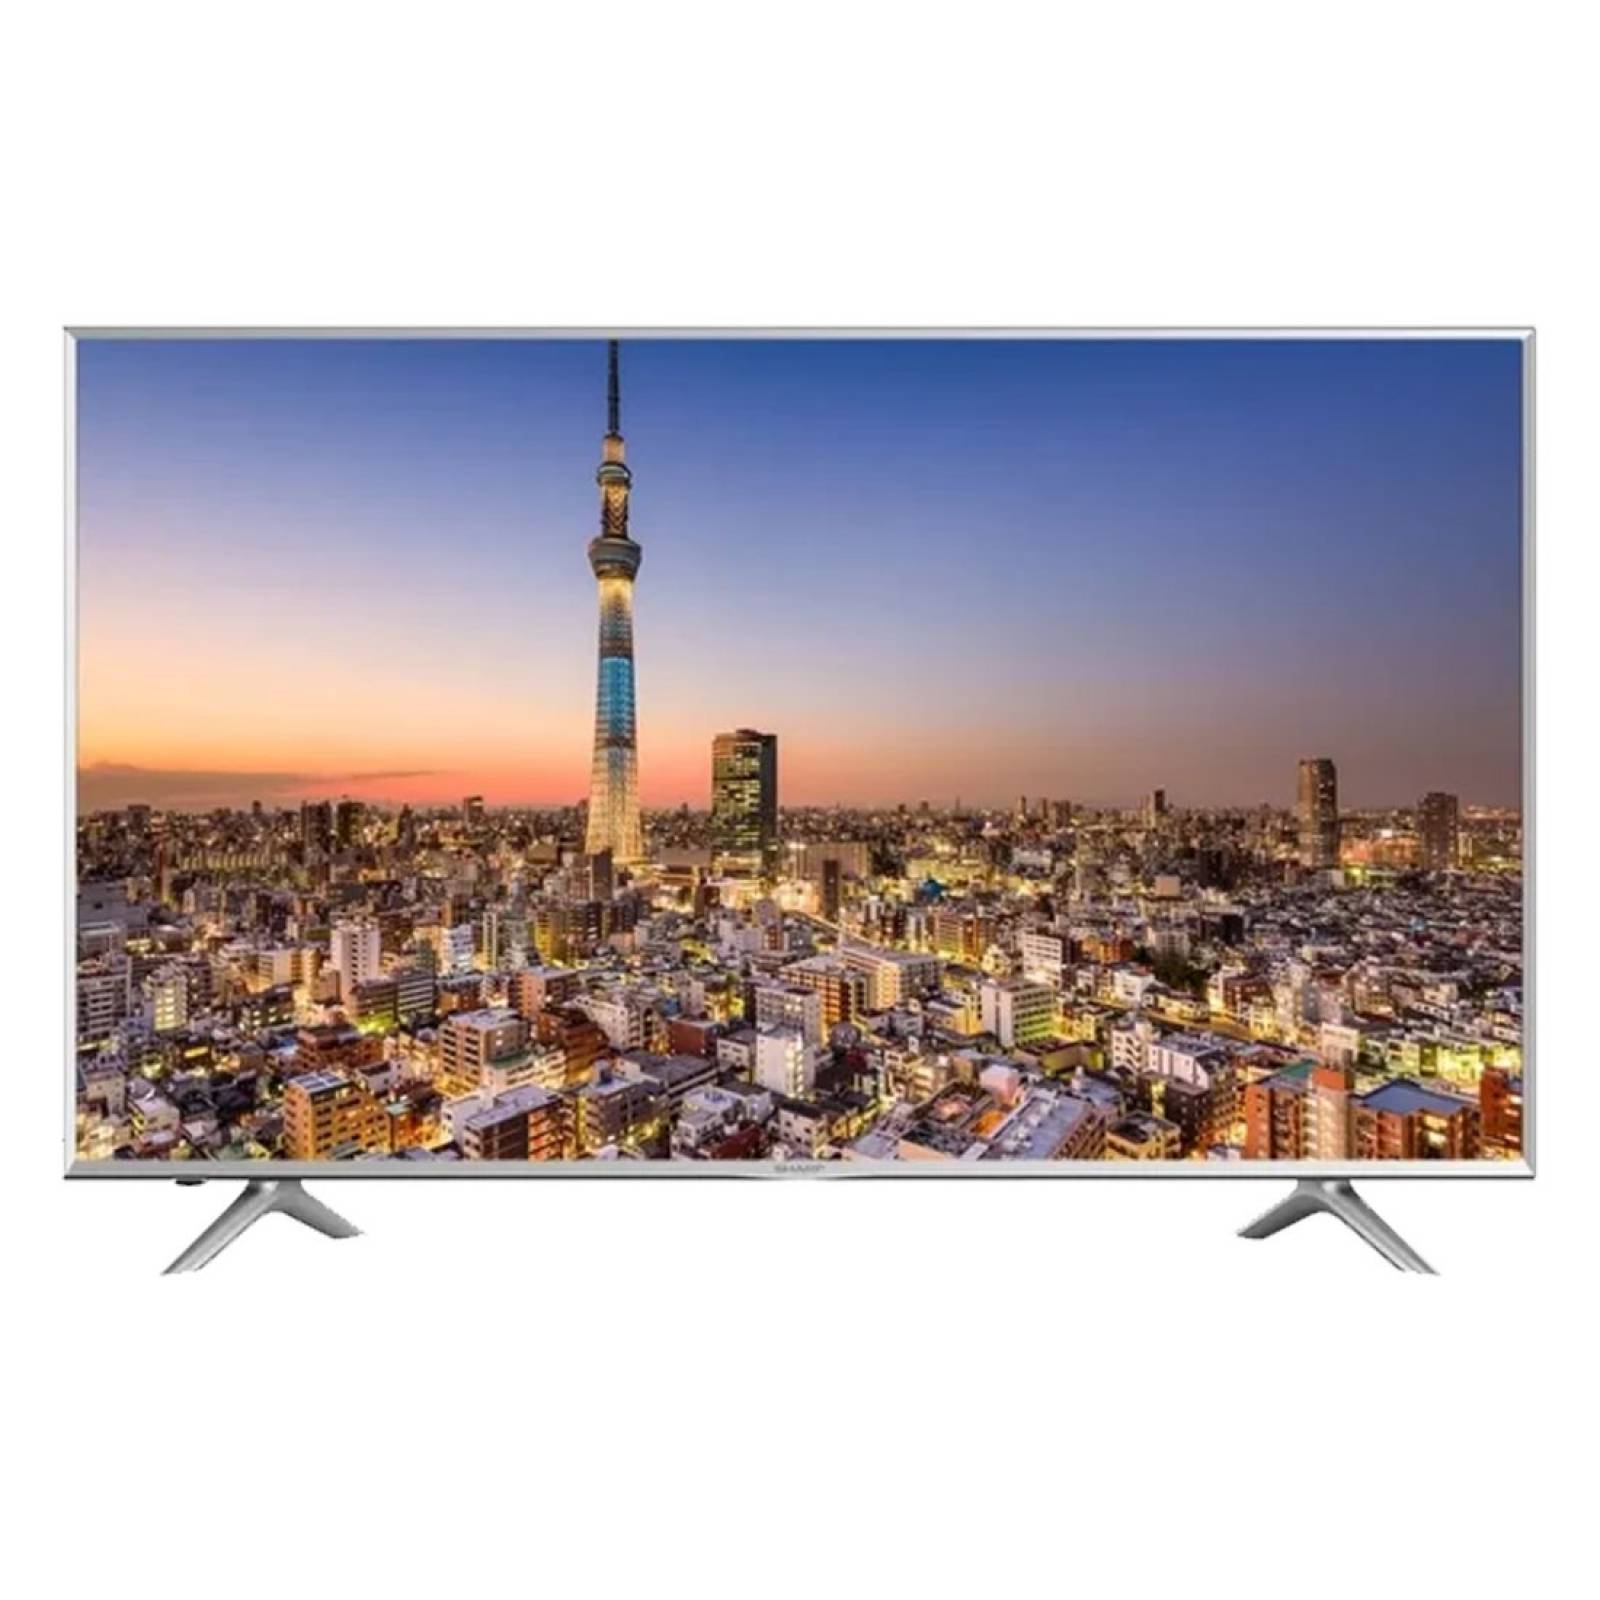 Smart TV Pantalla 65 Pulg Led 4K 3840X2160 Full HD Sharp Reacondionado